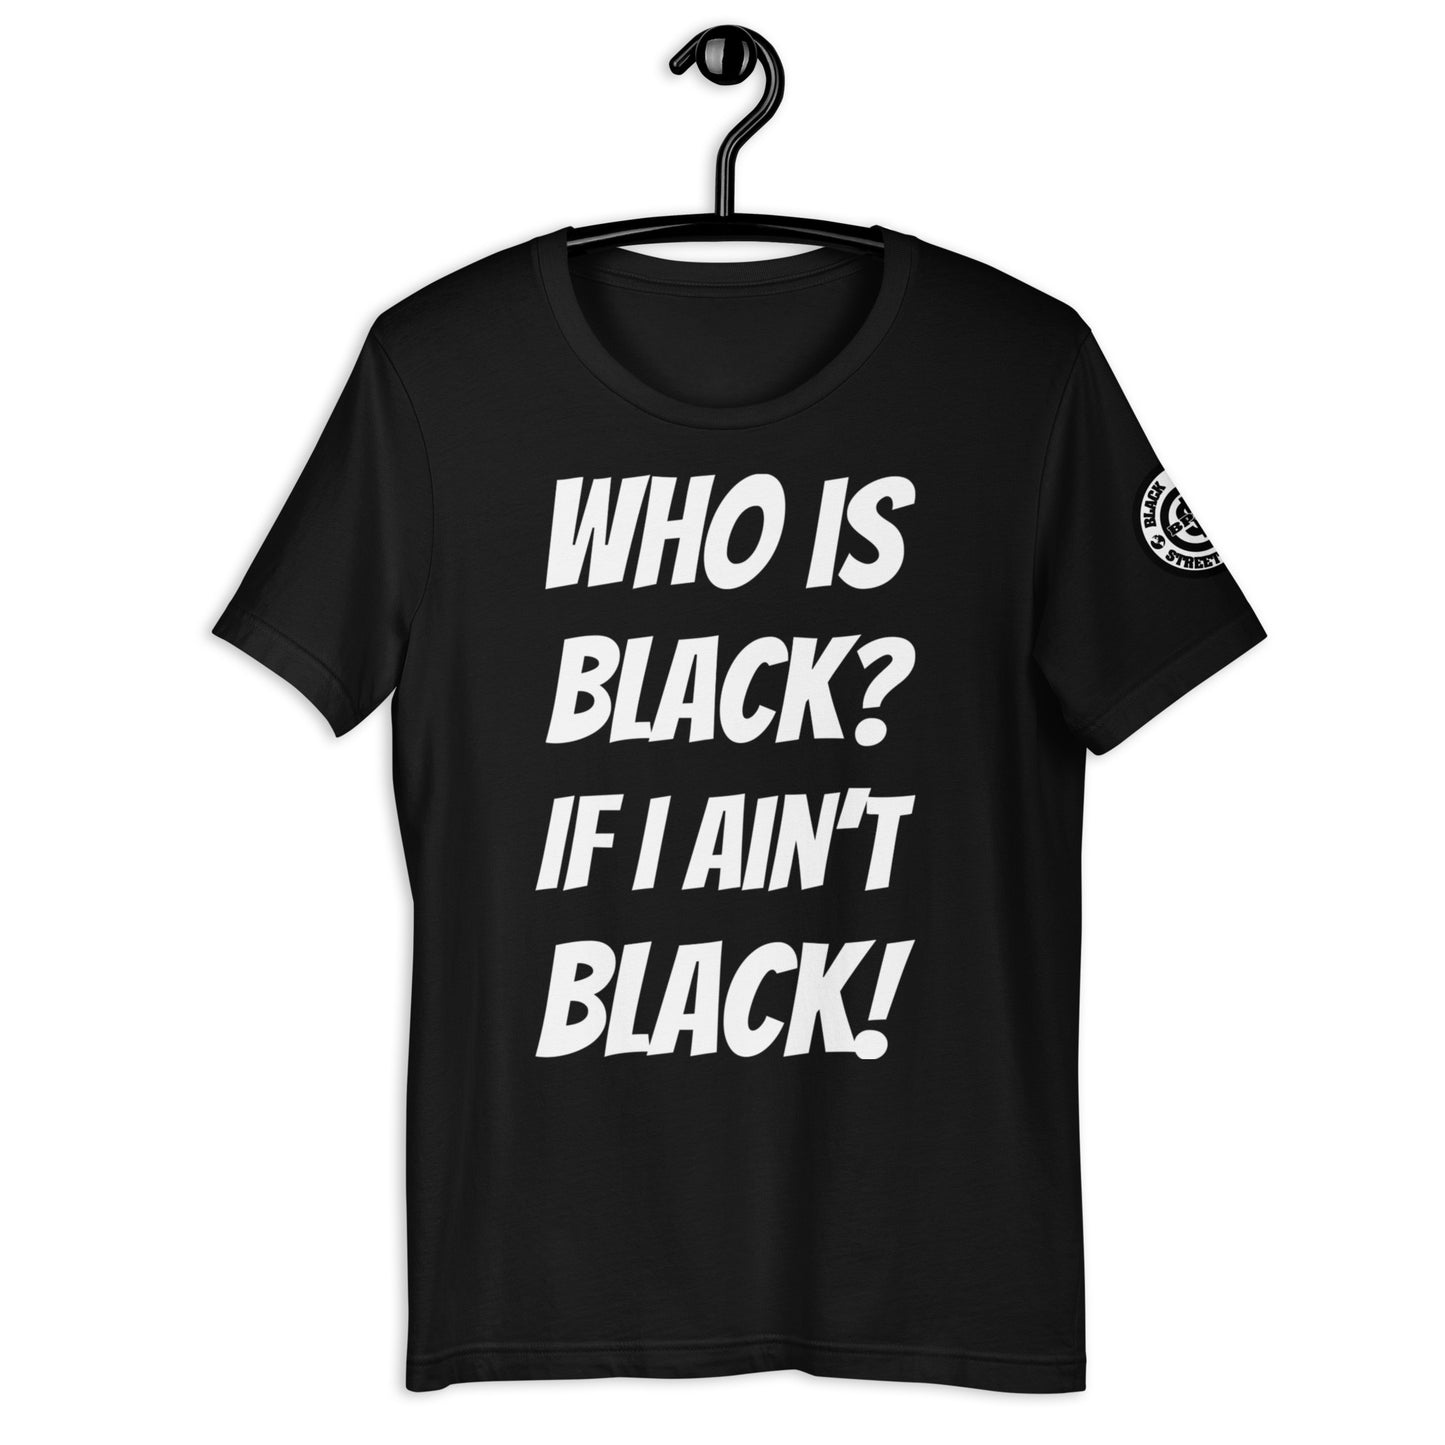 Black Paper - Who is Black?